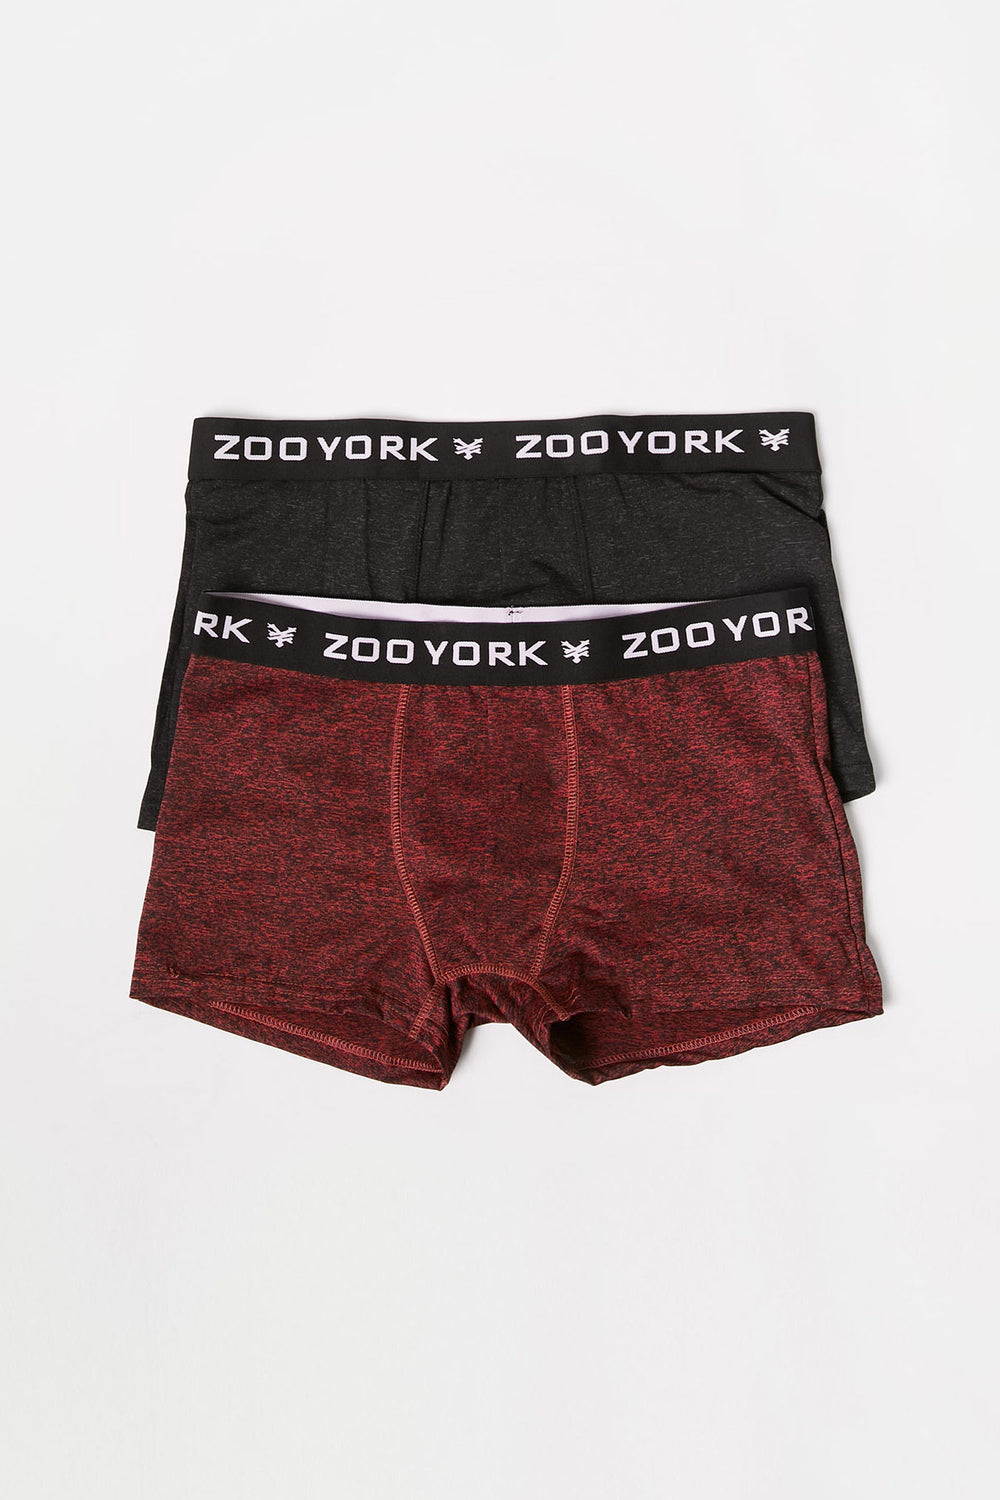 2 Paires de Boxers Space Dye Zoo York Homme Bourgogne